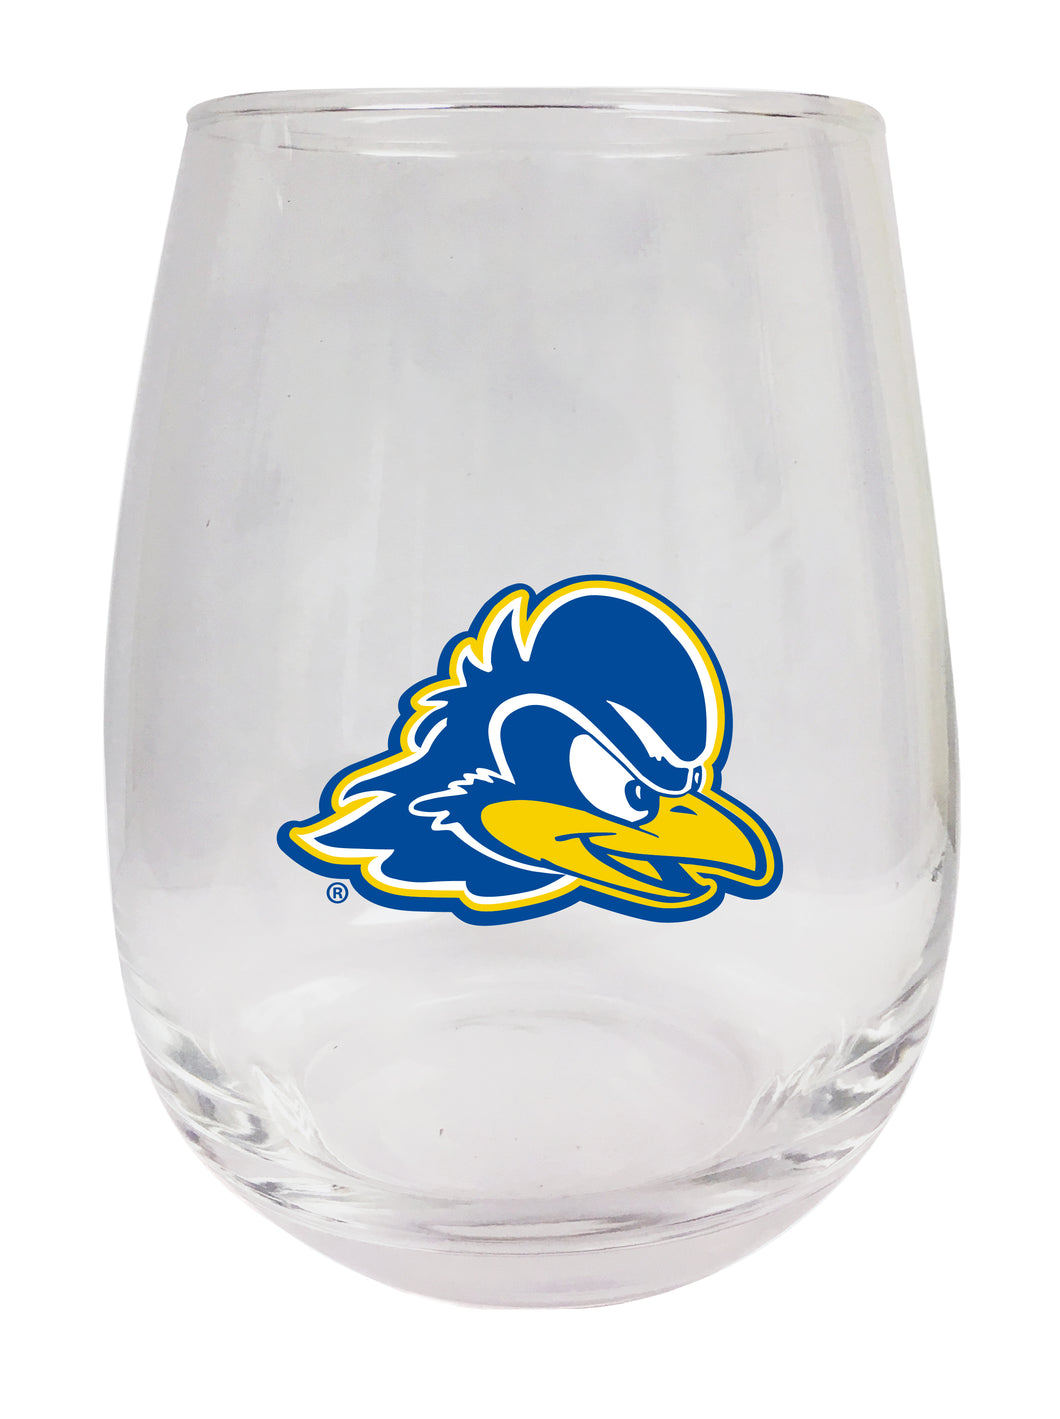 Delaware Blue Hens Stemless Wine Glass - 9 oz. | Officially Licensed NCAA Merchandise